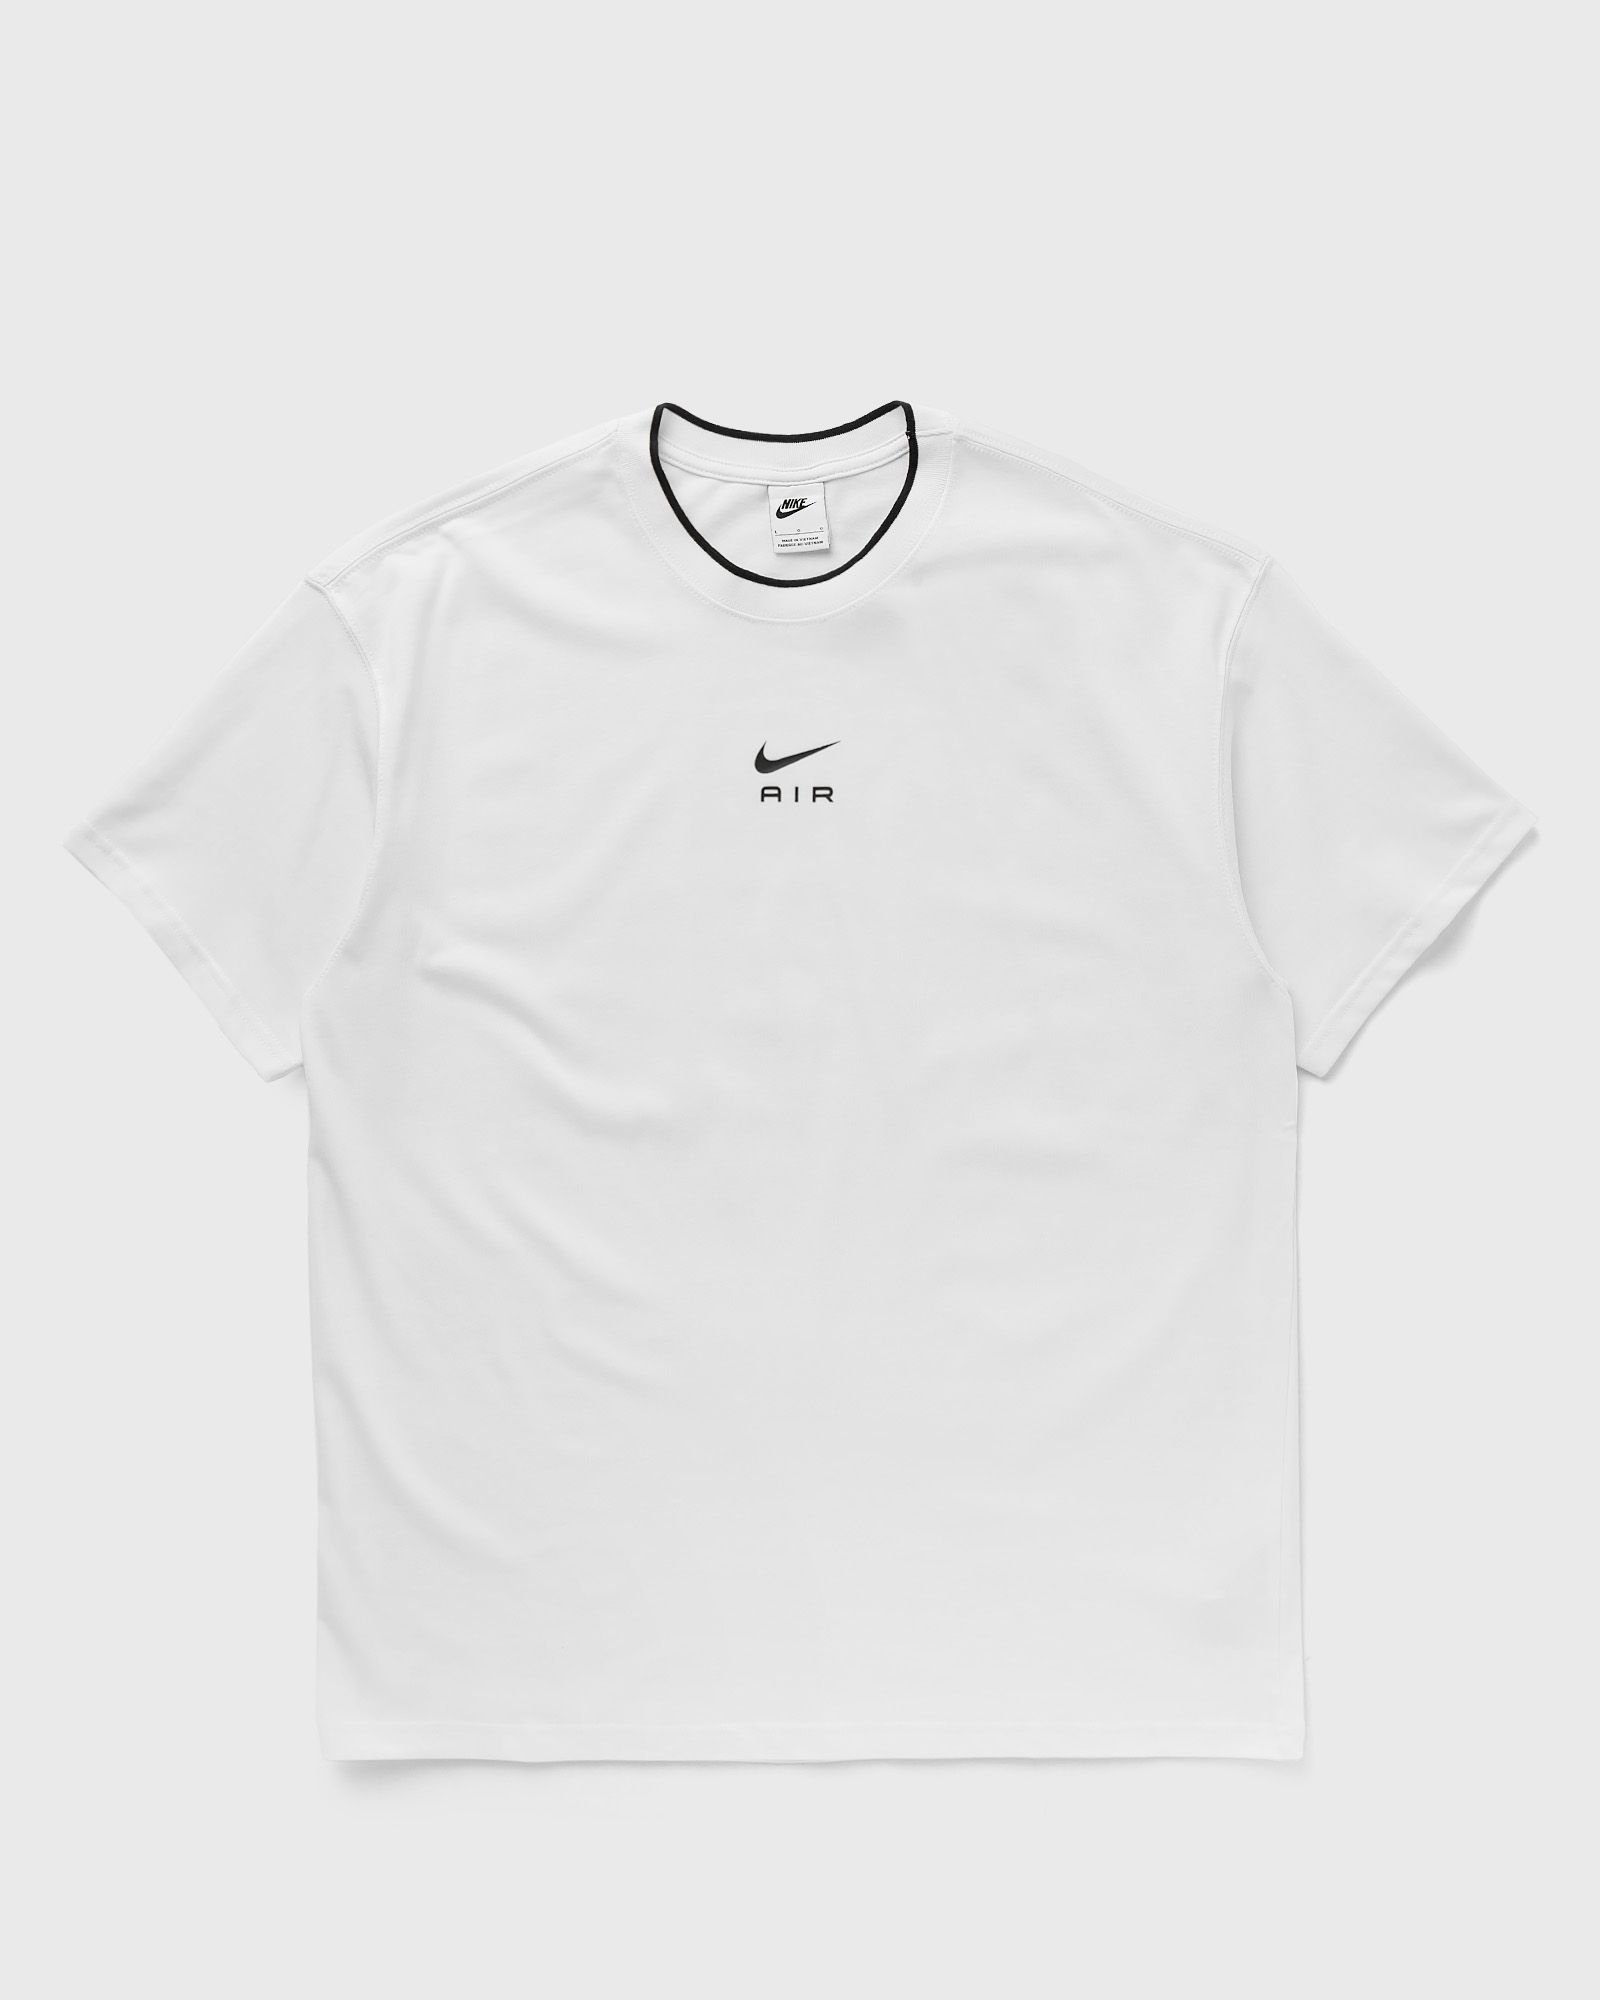 Nike - air men's t-shirt men shortsleeves white in größe:xl